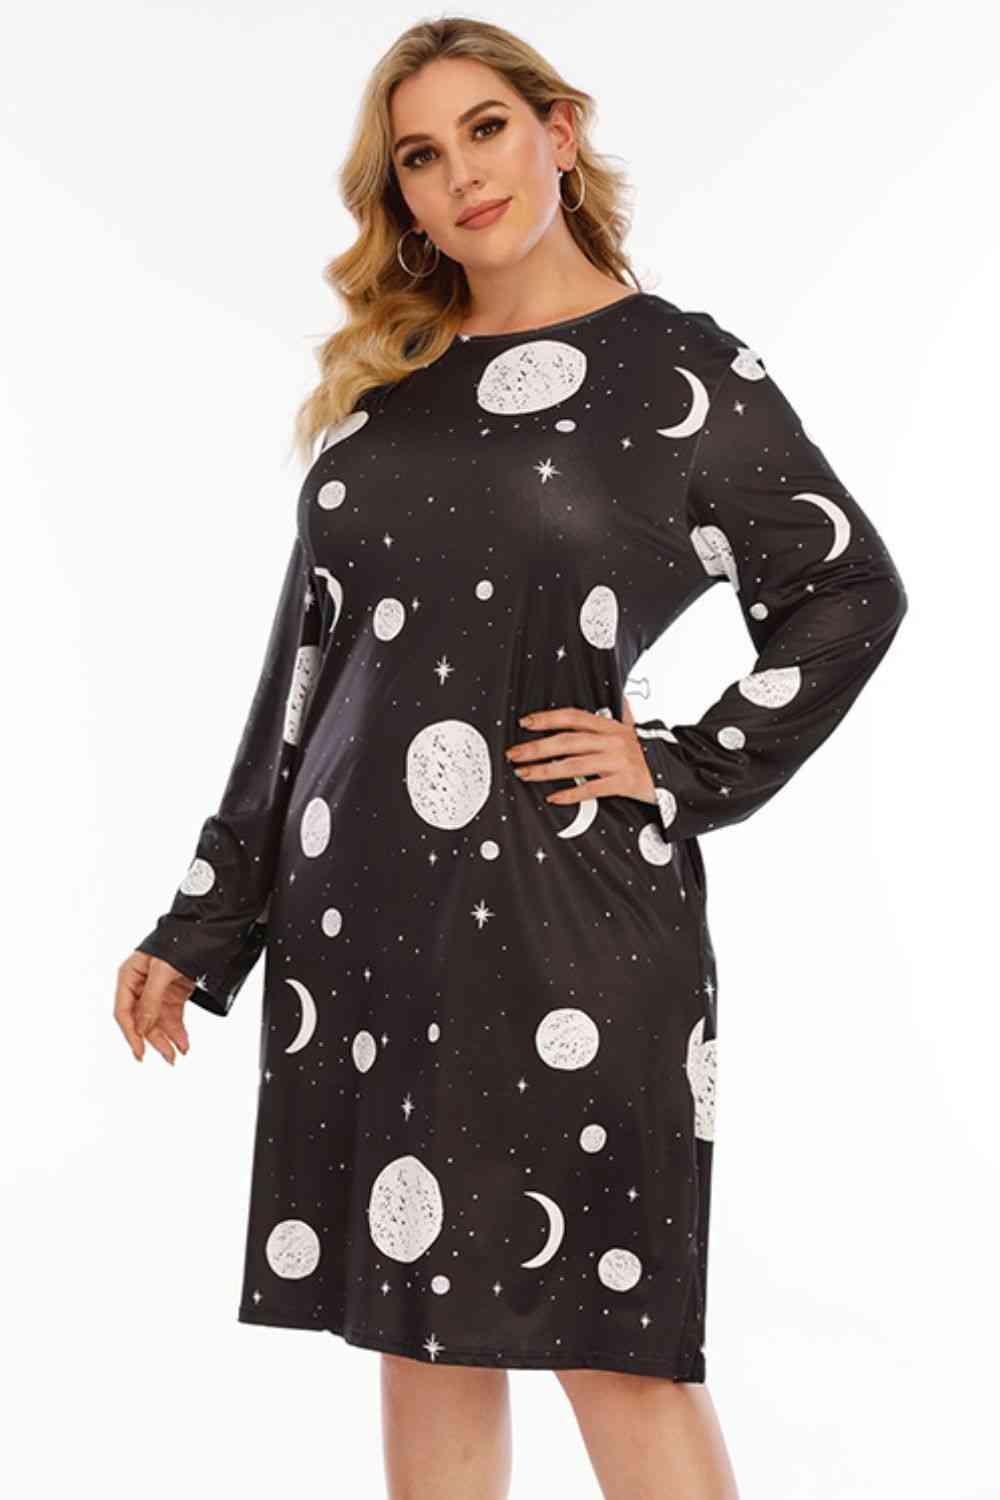 Plus Size Moon & Star Print Black Knee Length Dress - MXSTUDIO.COM